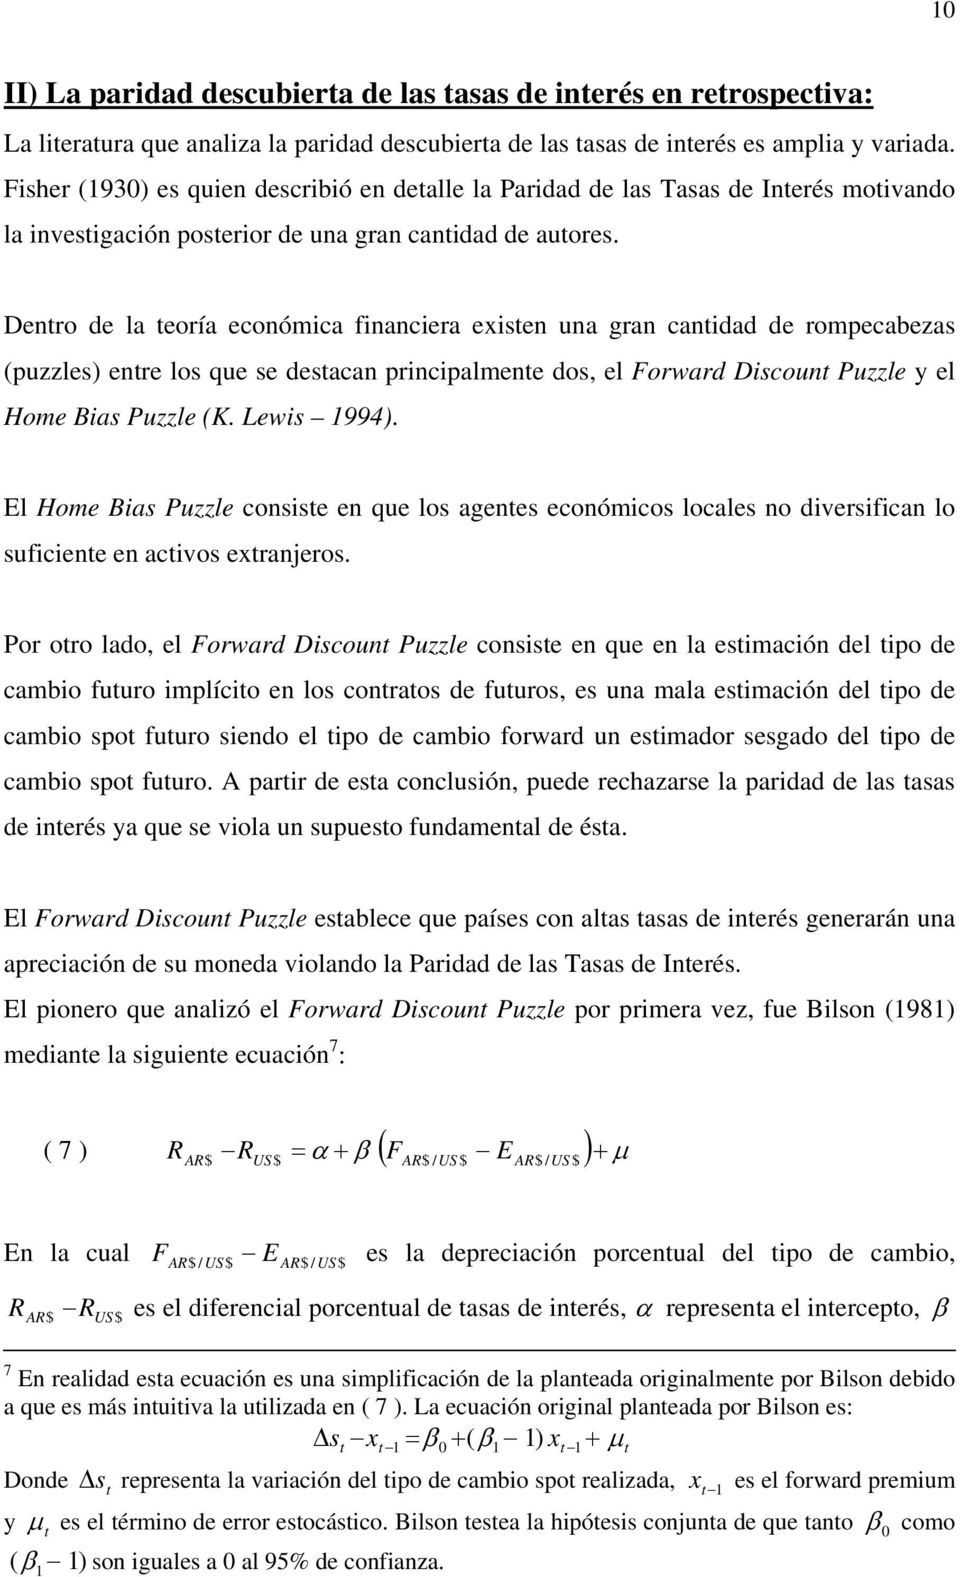 Dnro d la oría conómica financira xisn una gran canidad d rompcabzas (puzzls) nr los qu s dsacan principalmn dos, l Forward Discoun Puzzl y l Hom Bias Puzzl (K. Lwis 1994).